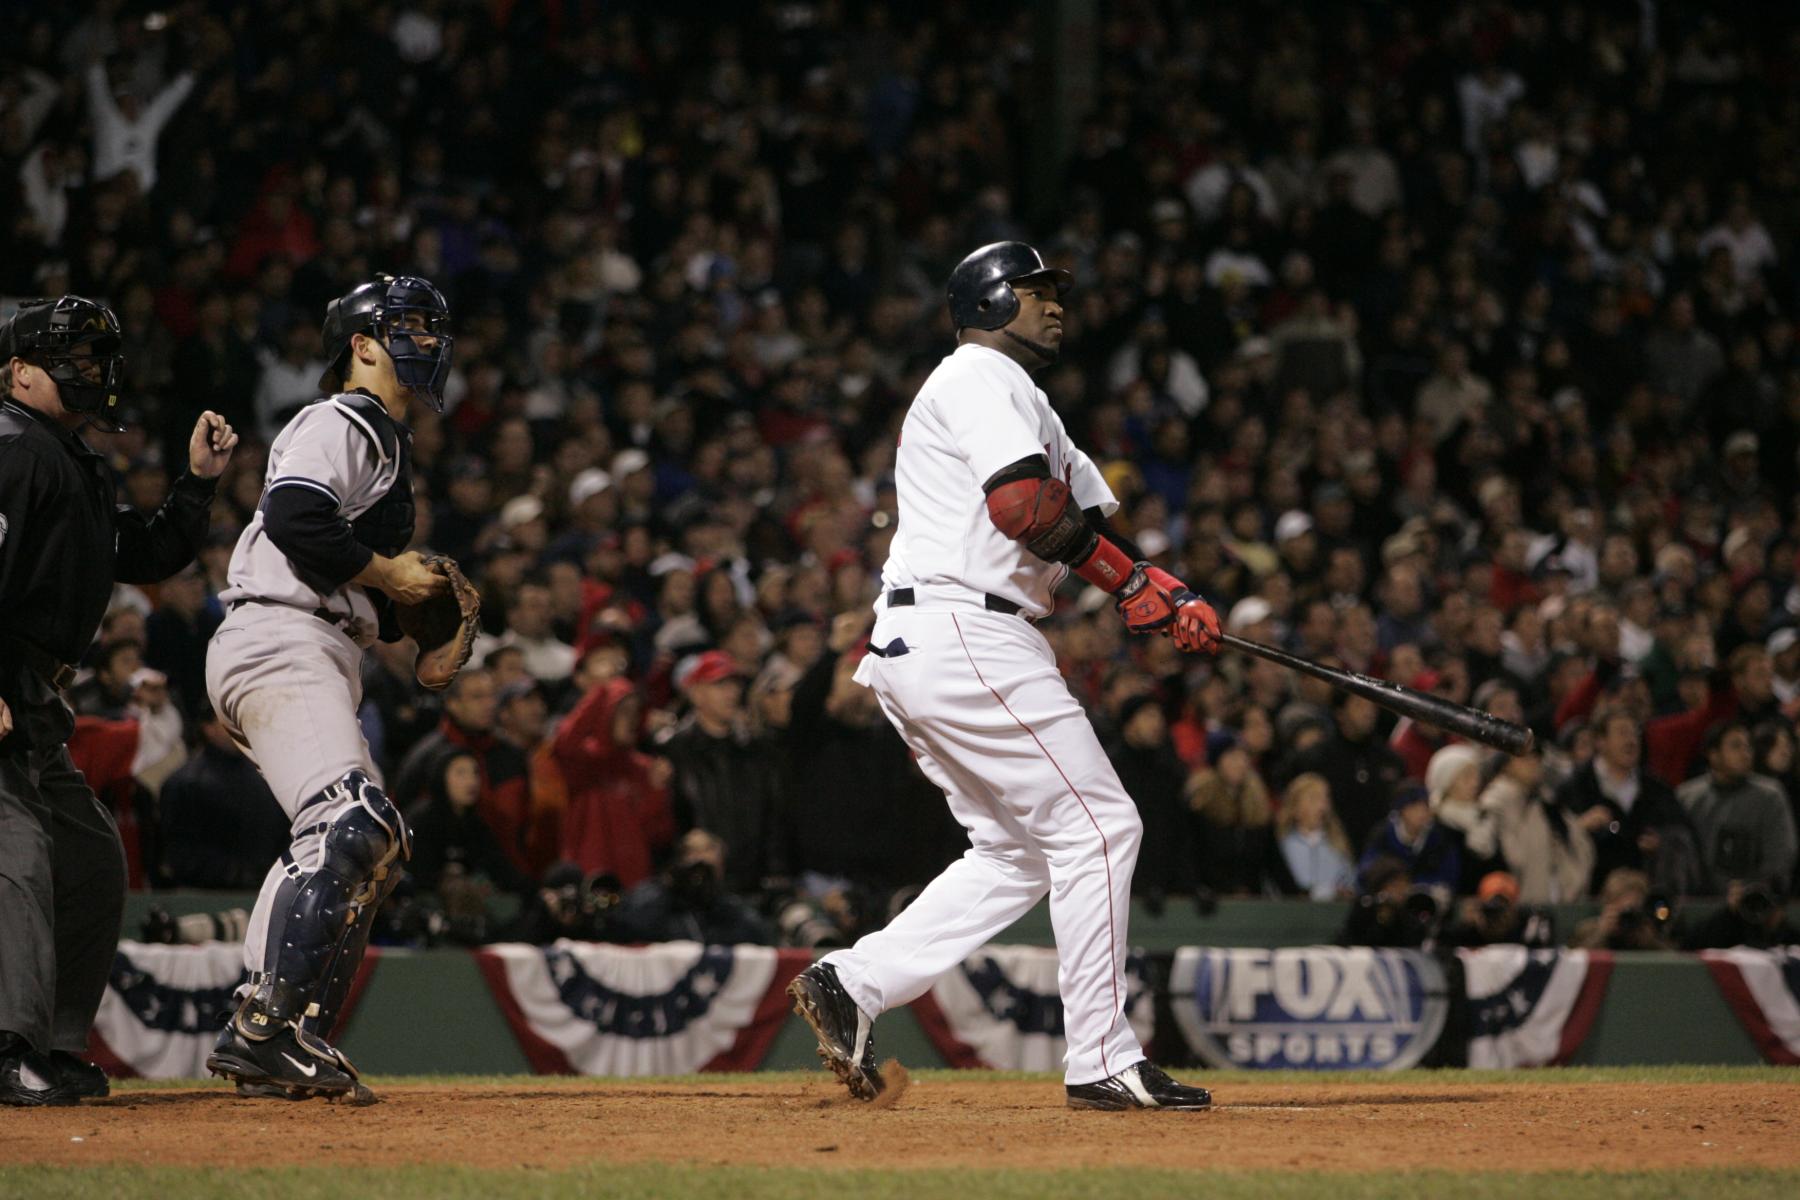 Kevin Millar reflects on David Ortiz's legendary Red Sox career